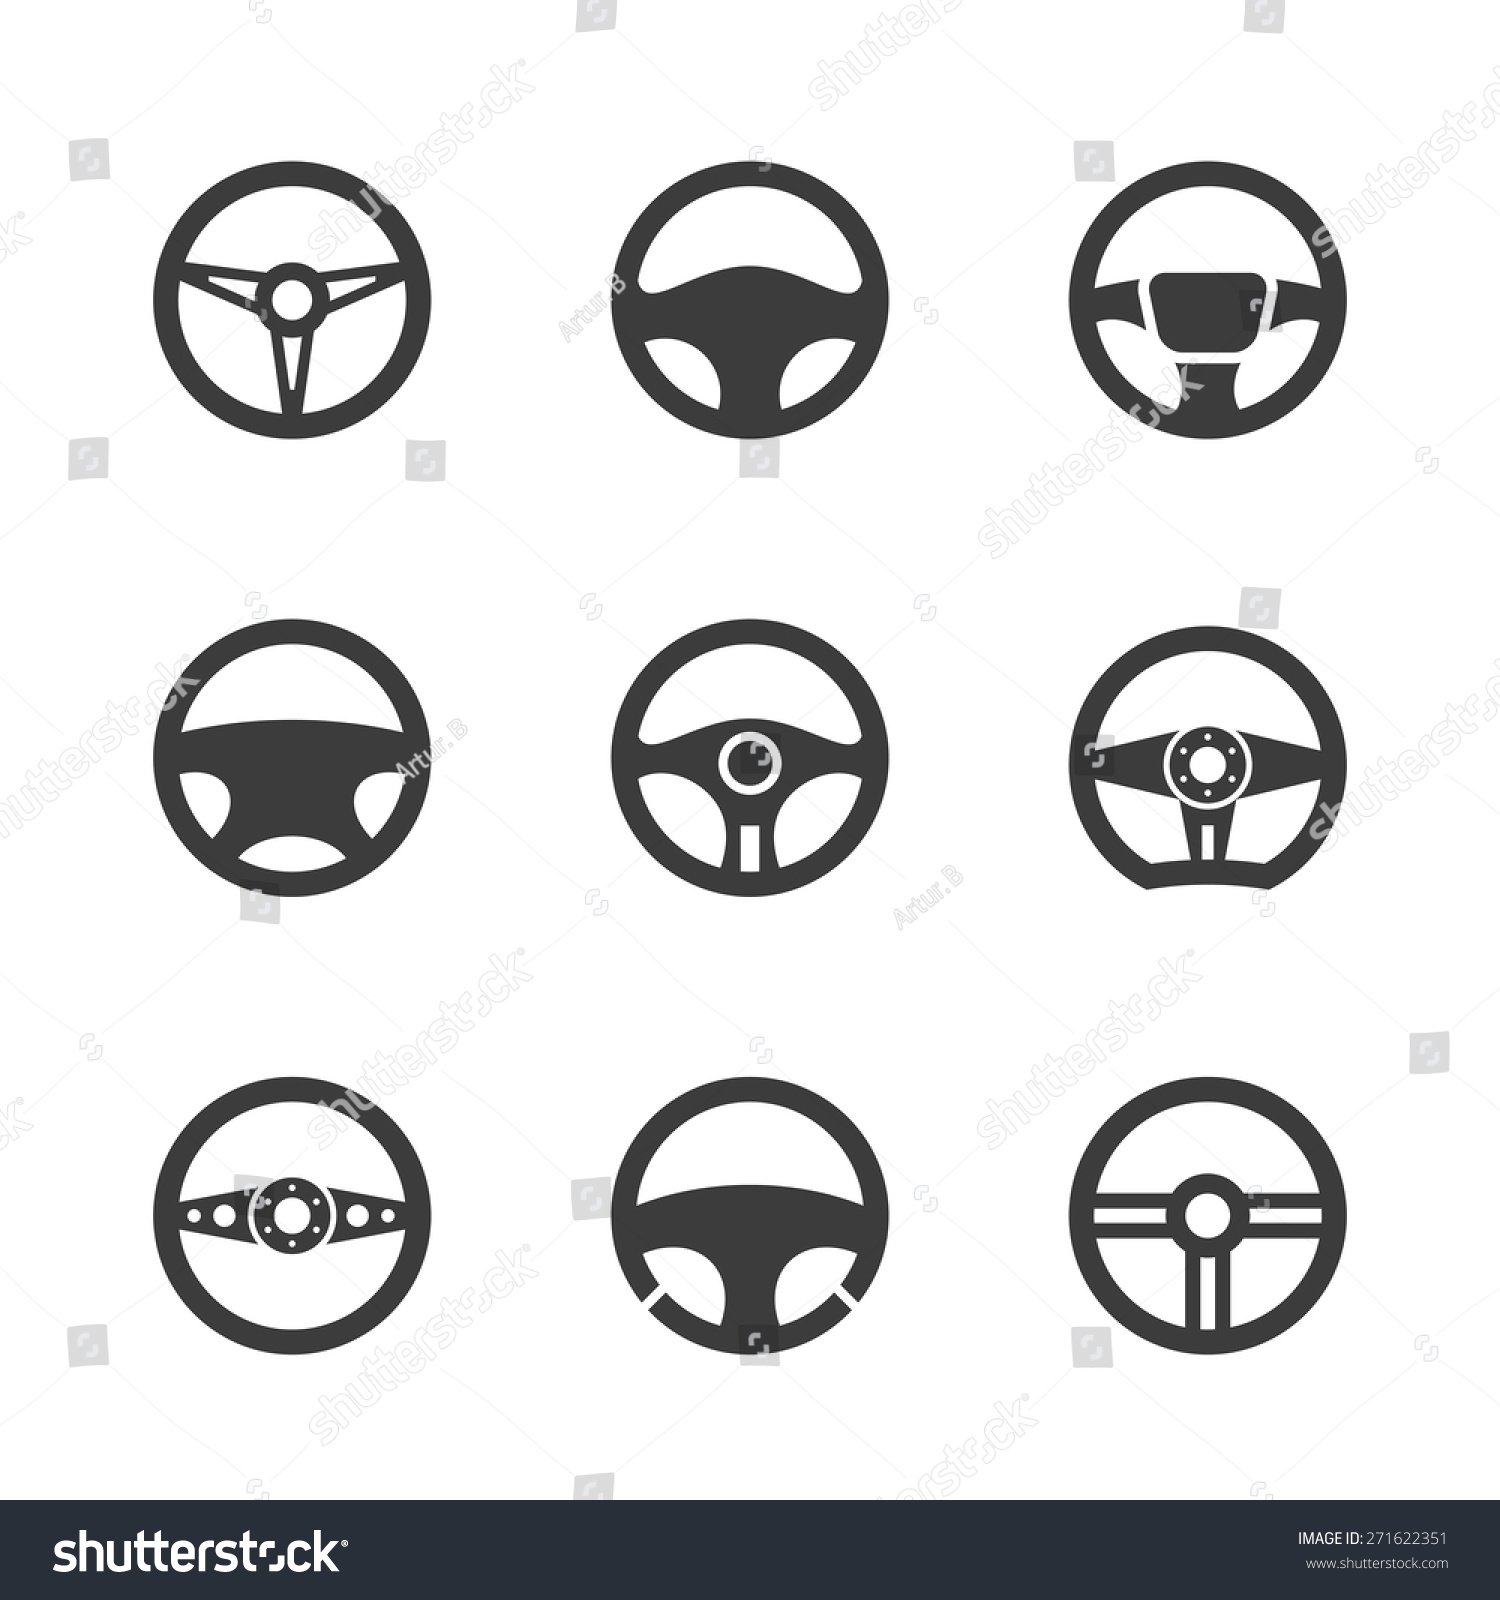 Steering Wheel Icons Set Stock Vector 271622351 - Shutterstock